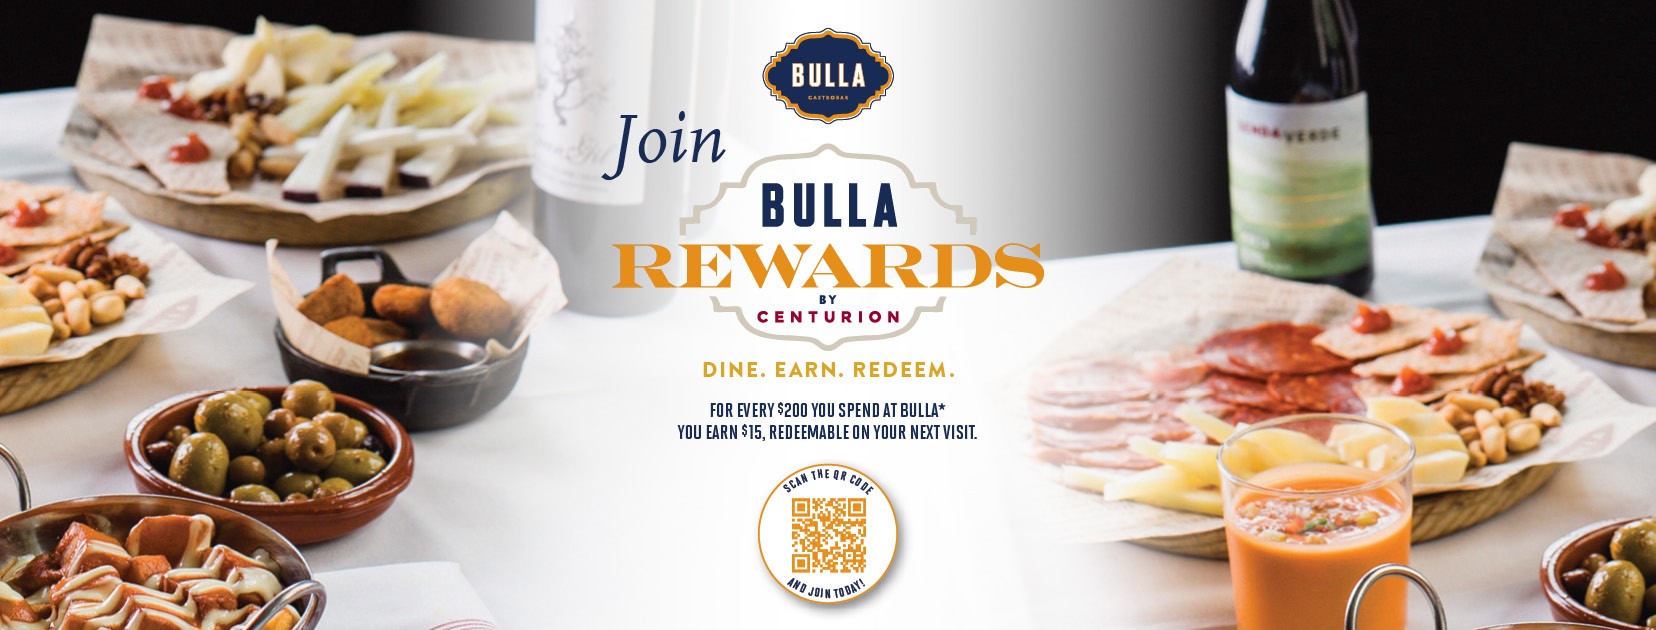 Bulla Rewards loyalty program